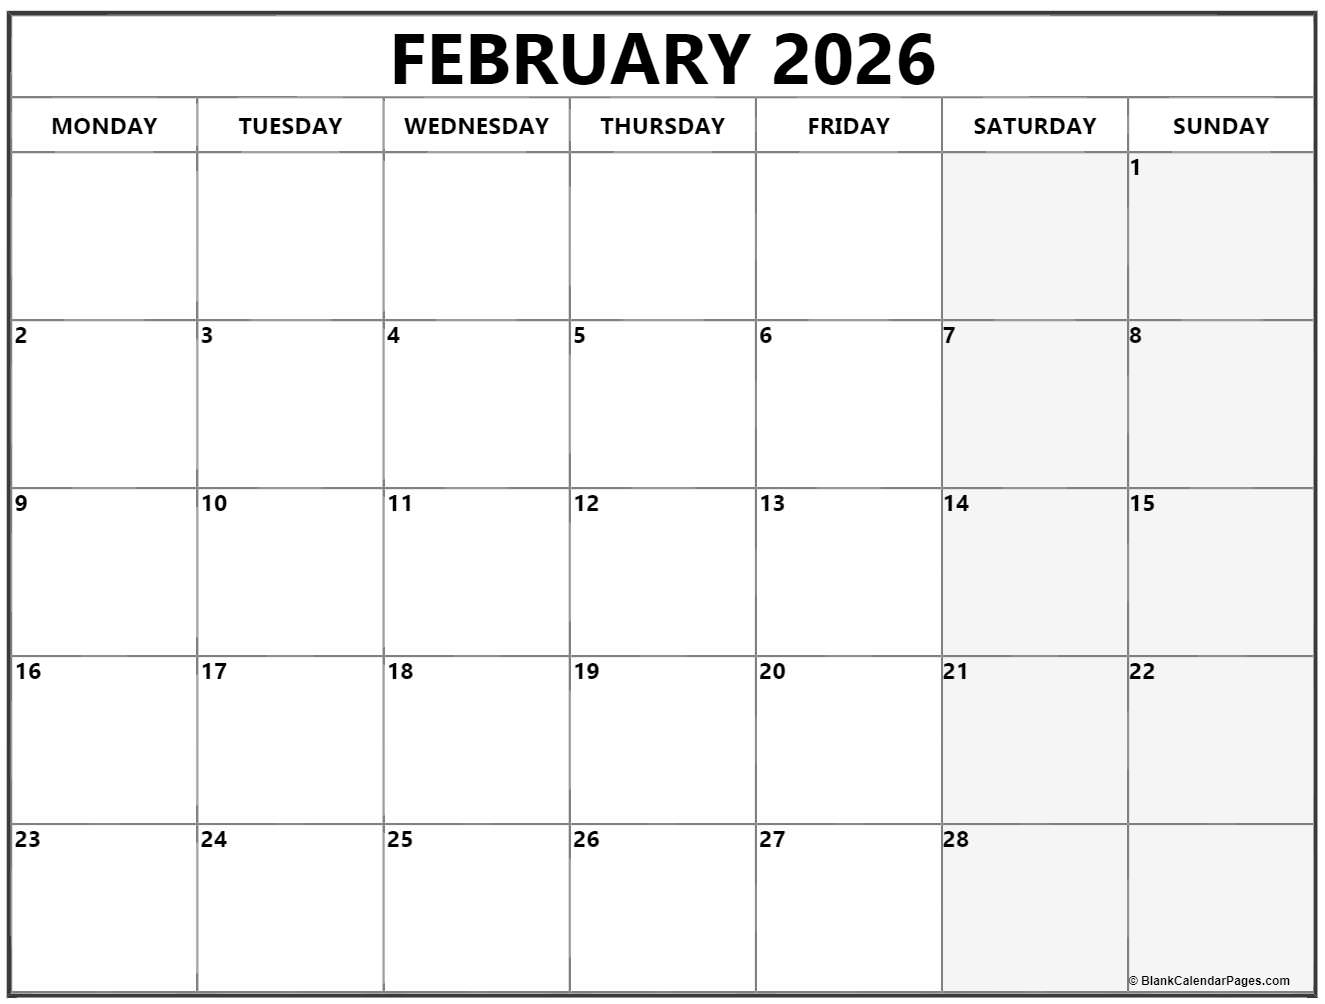 February 2026 Monday calendar. Monday to Sunday